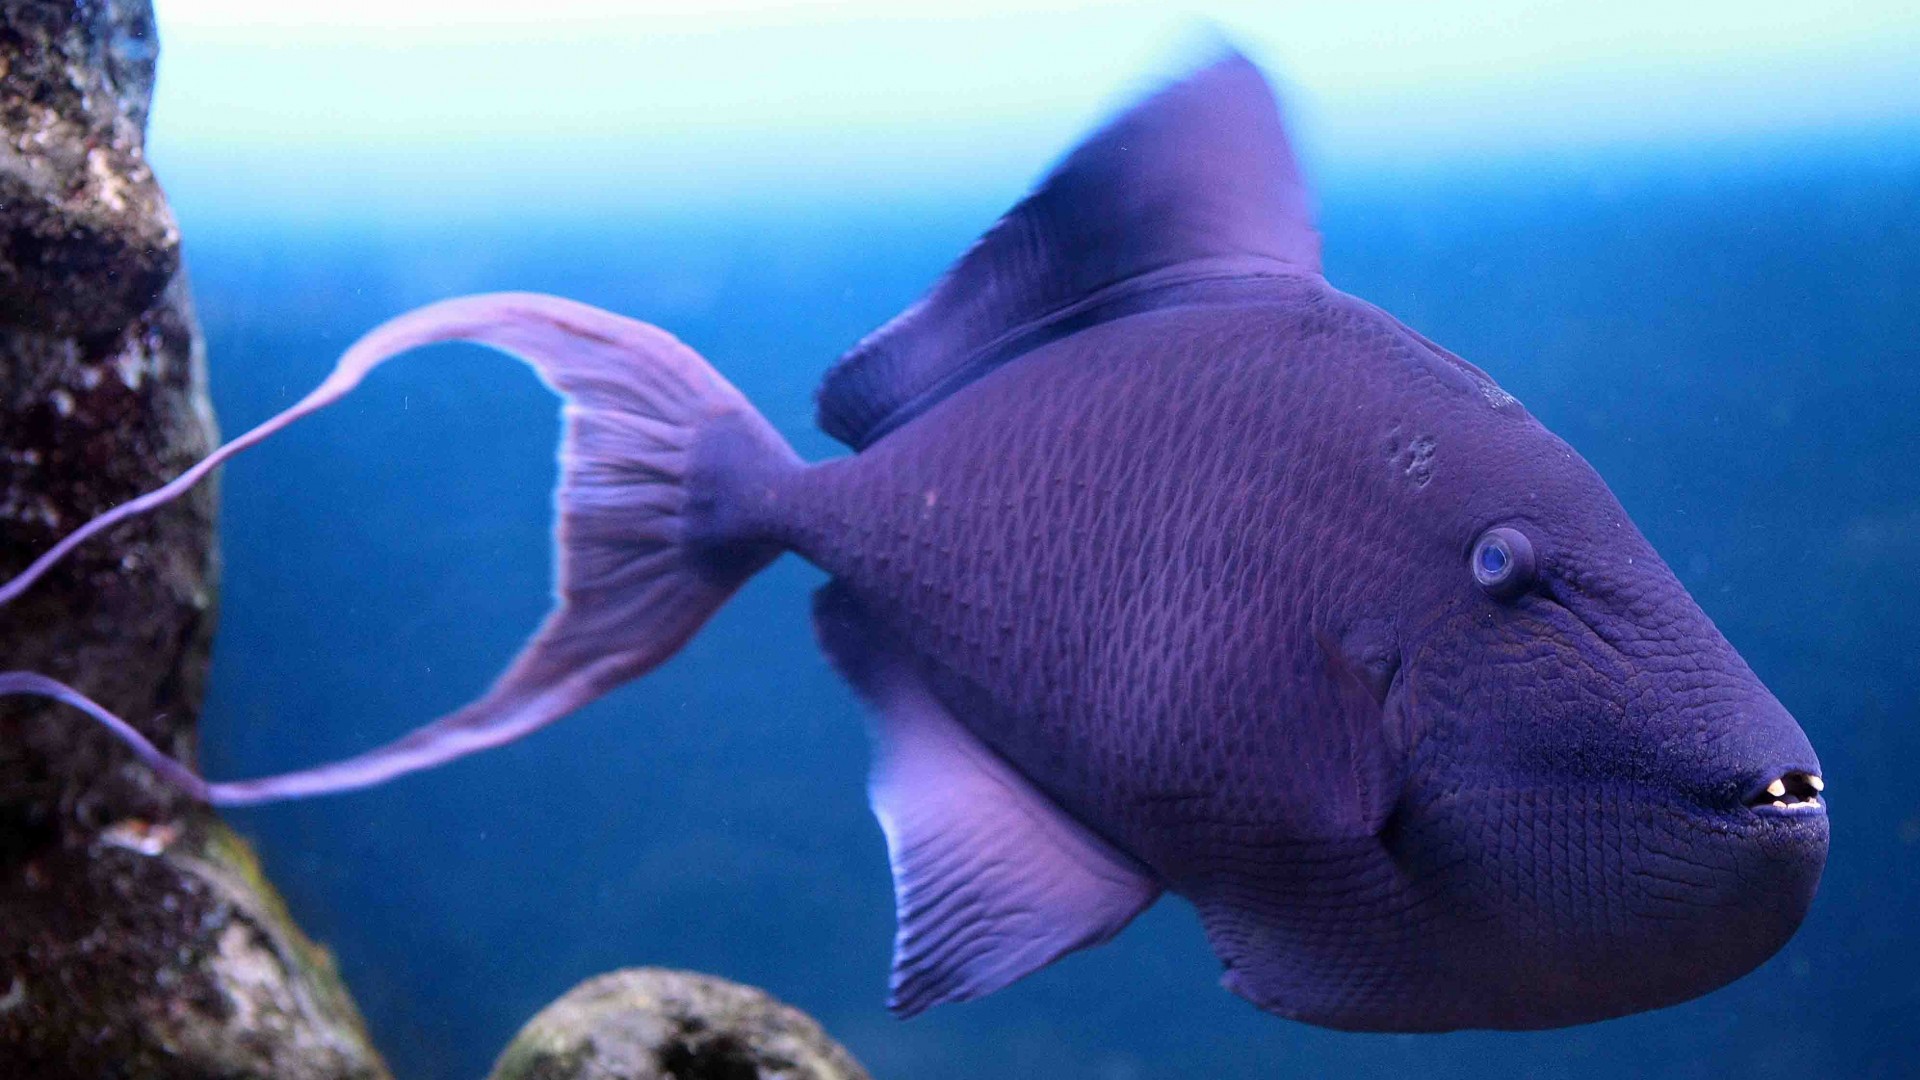 Grey triggerfish, Atlantic, Nova Scotia, Argentina, Mediterranean Sea, west coast of Africa, diving, tourism, purple fish, underwater, blue (horizontal)